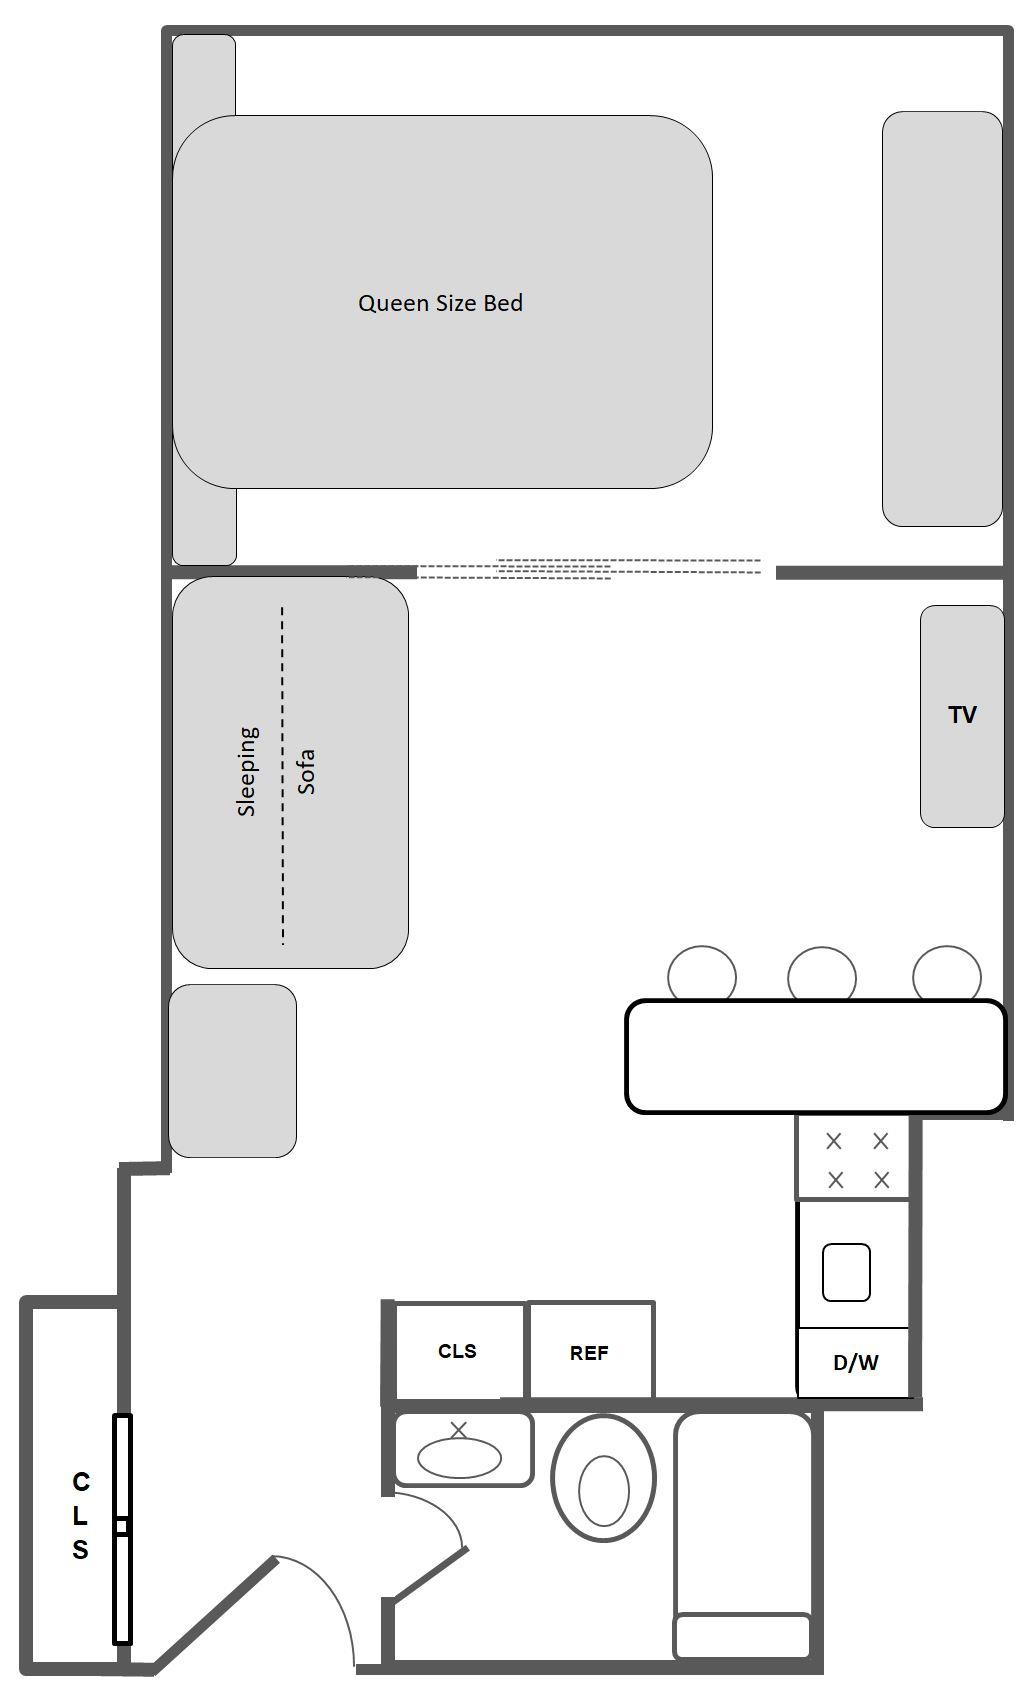 Floorplan for 230 East 52nd Street, 2-B